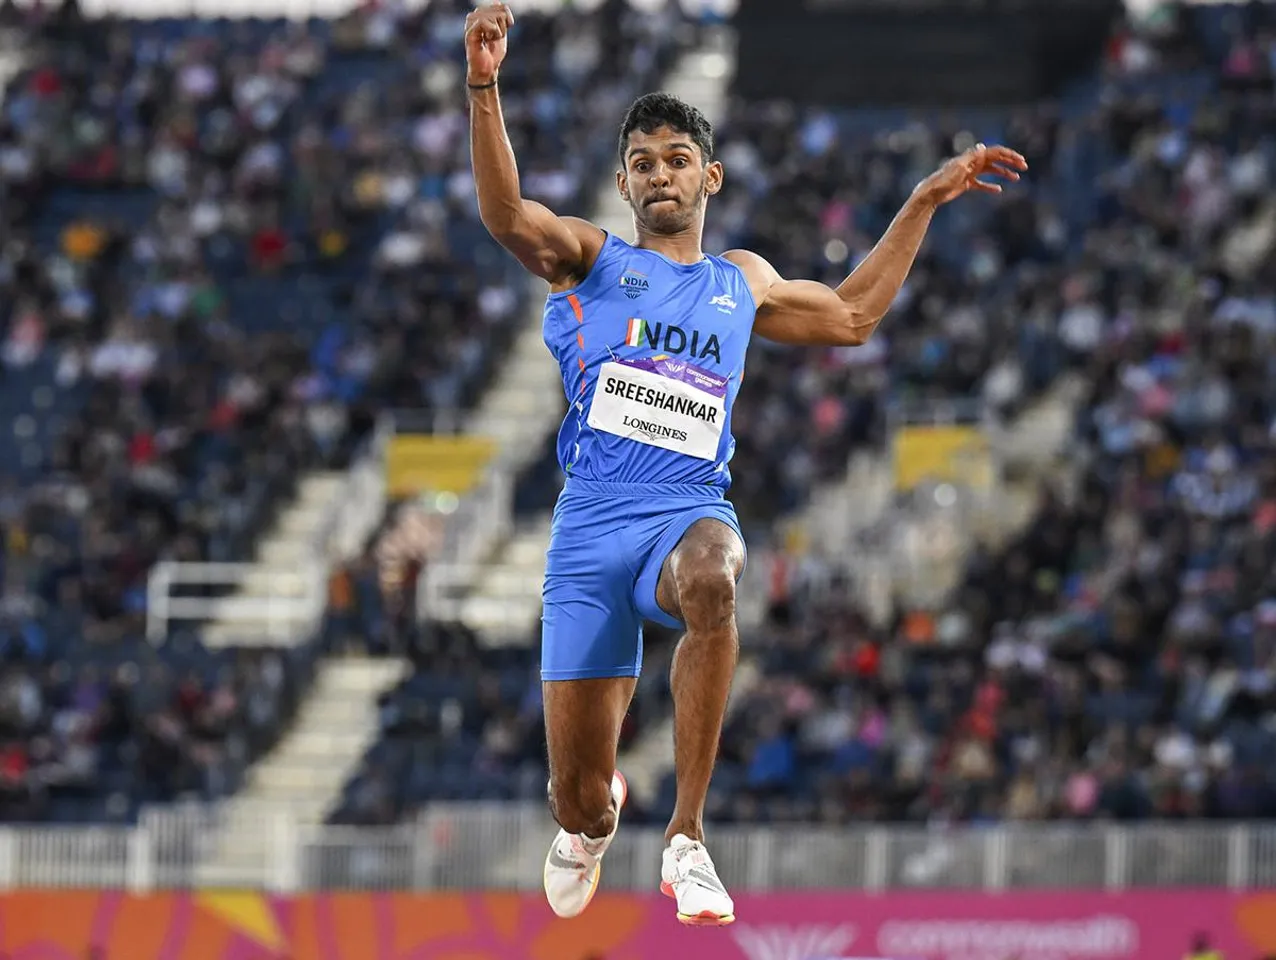 Long Jumper Murali Sreeshankar rules out of Paris Olympics 2024 after suffering knee injury